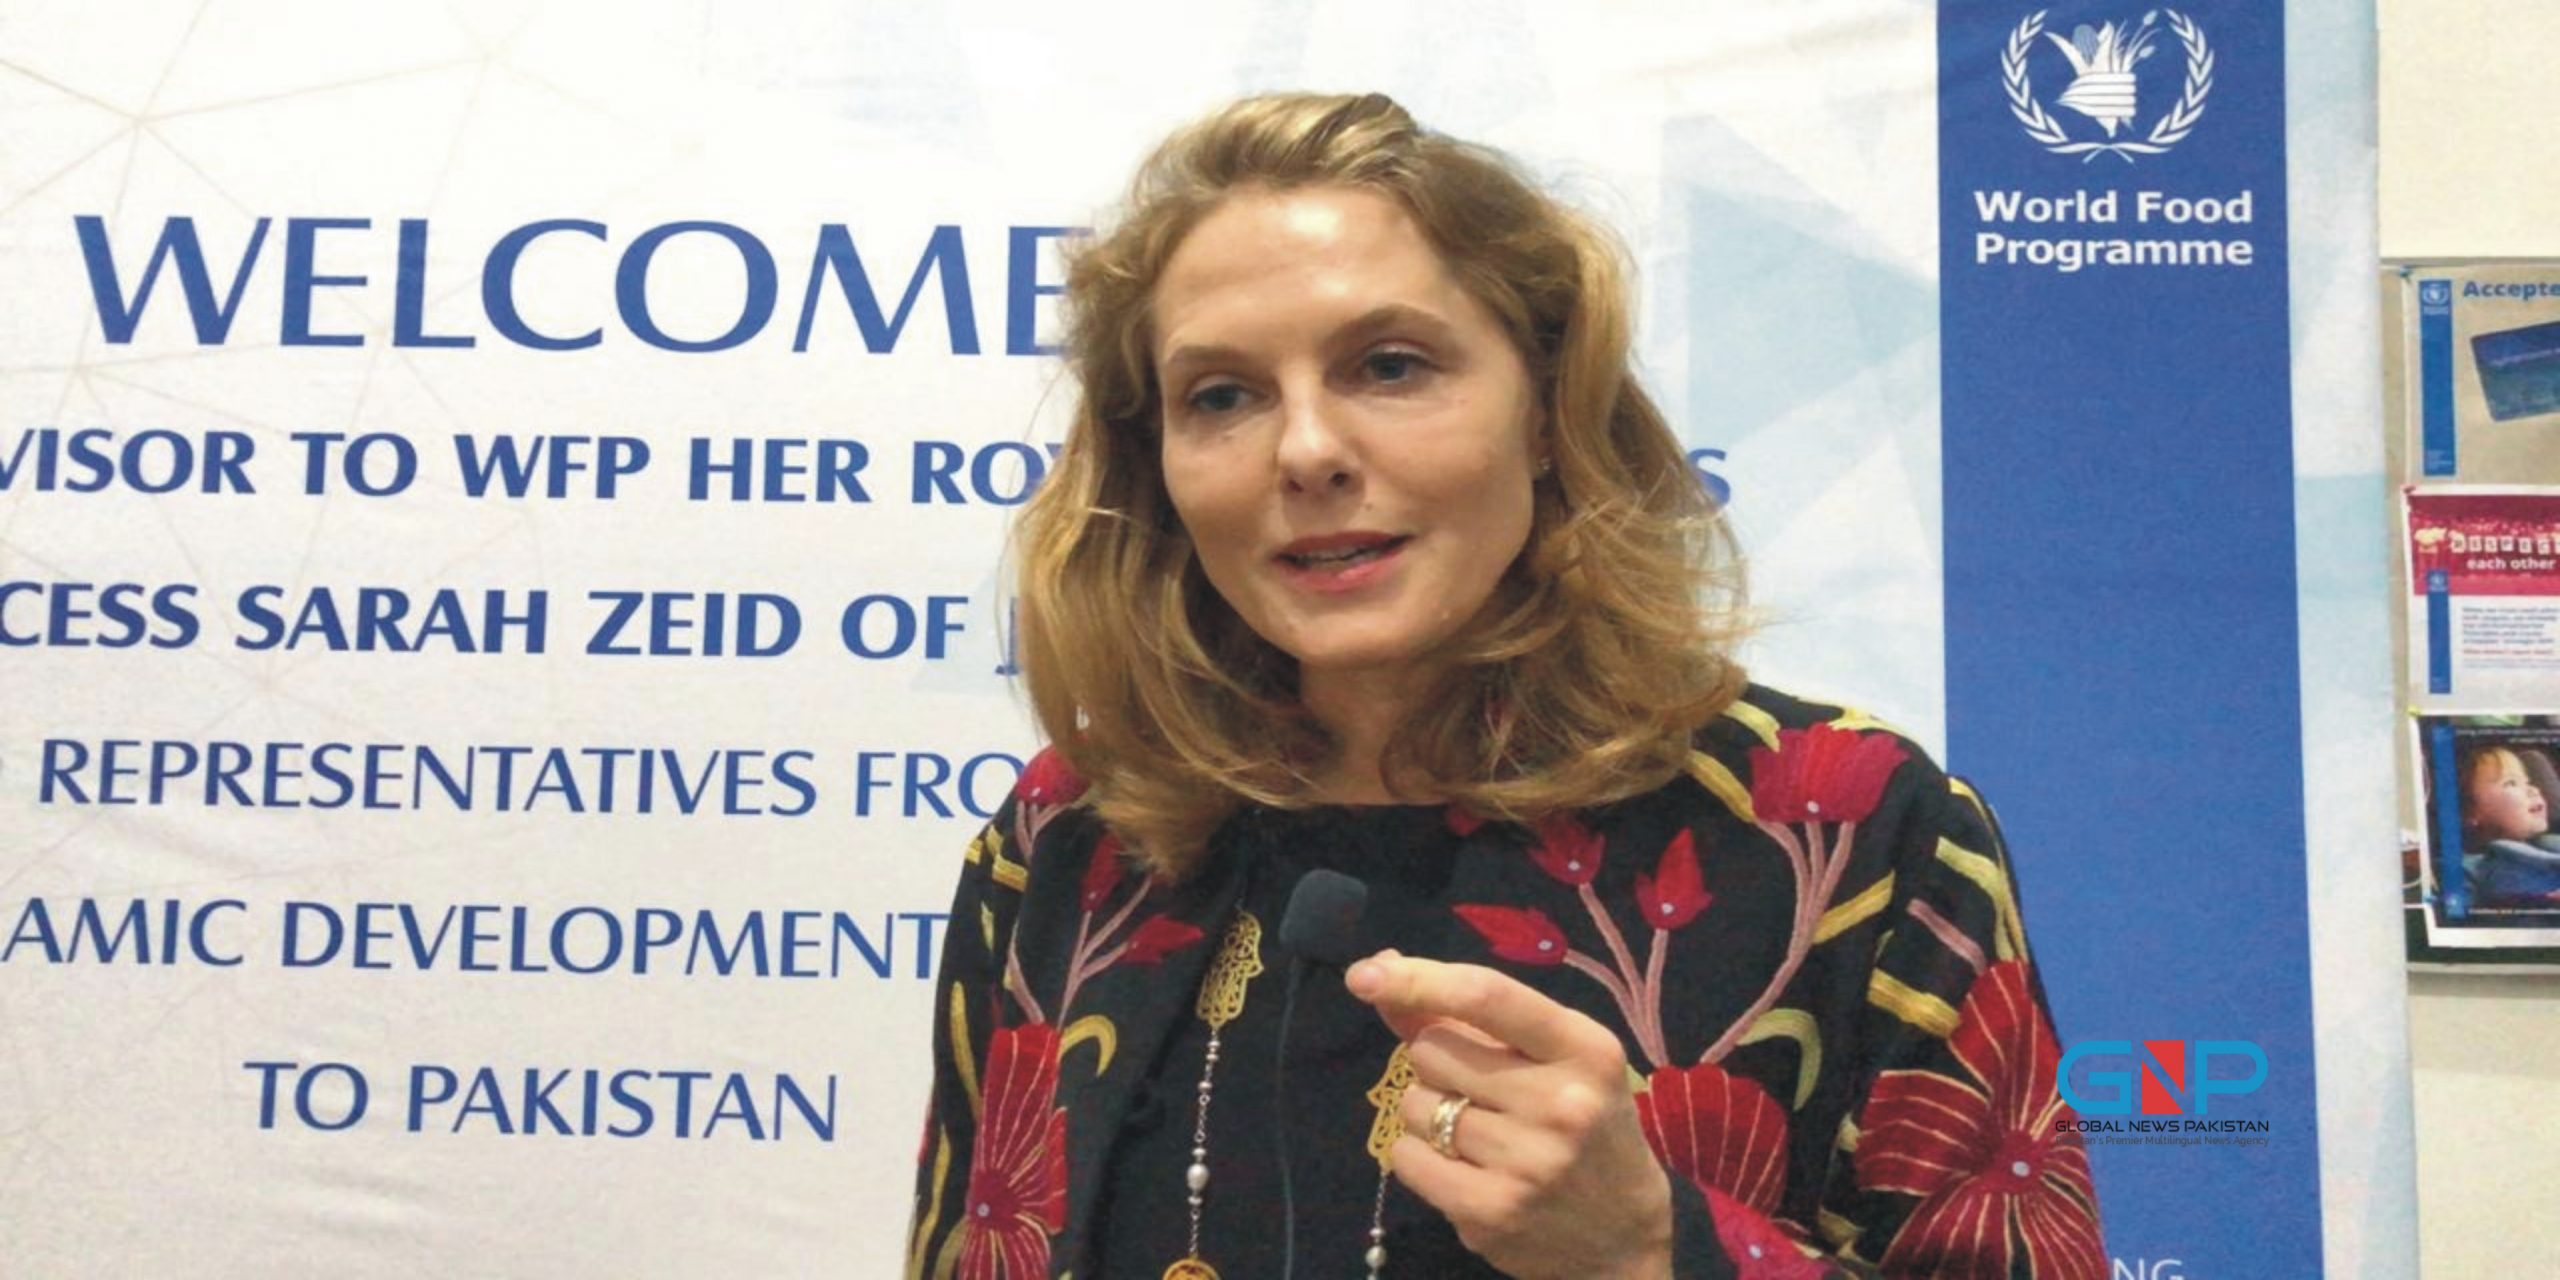 Pakistan will effectively resolve its food crisis Jordan Princess scaled